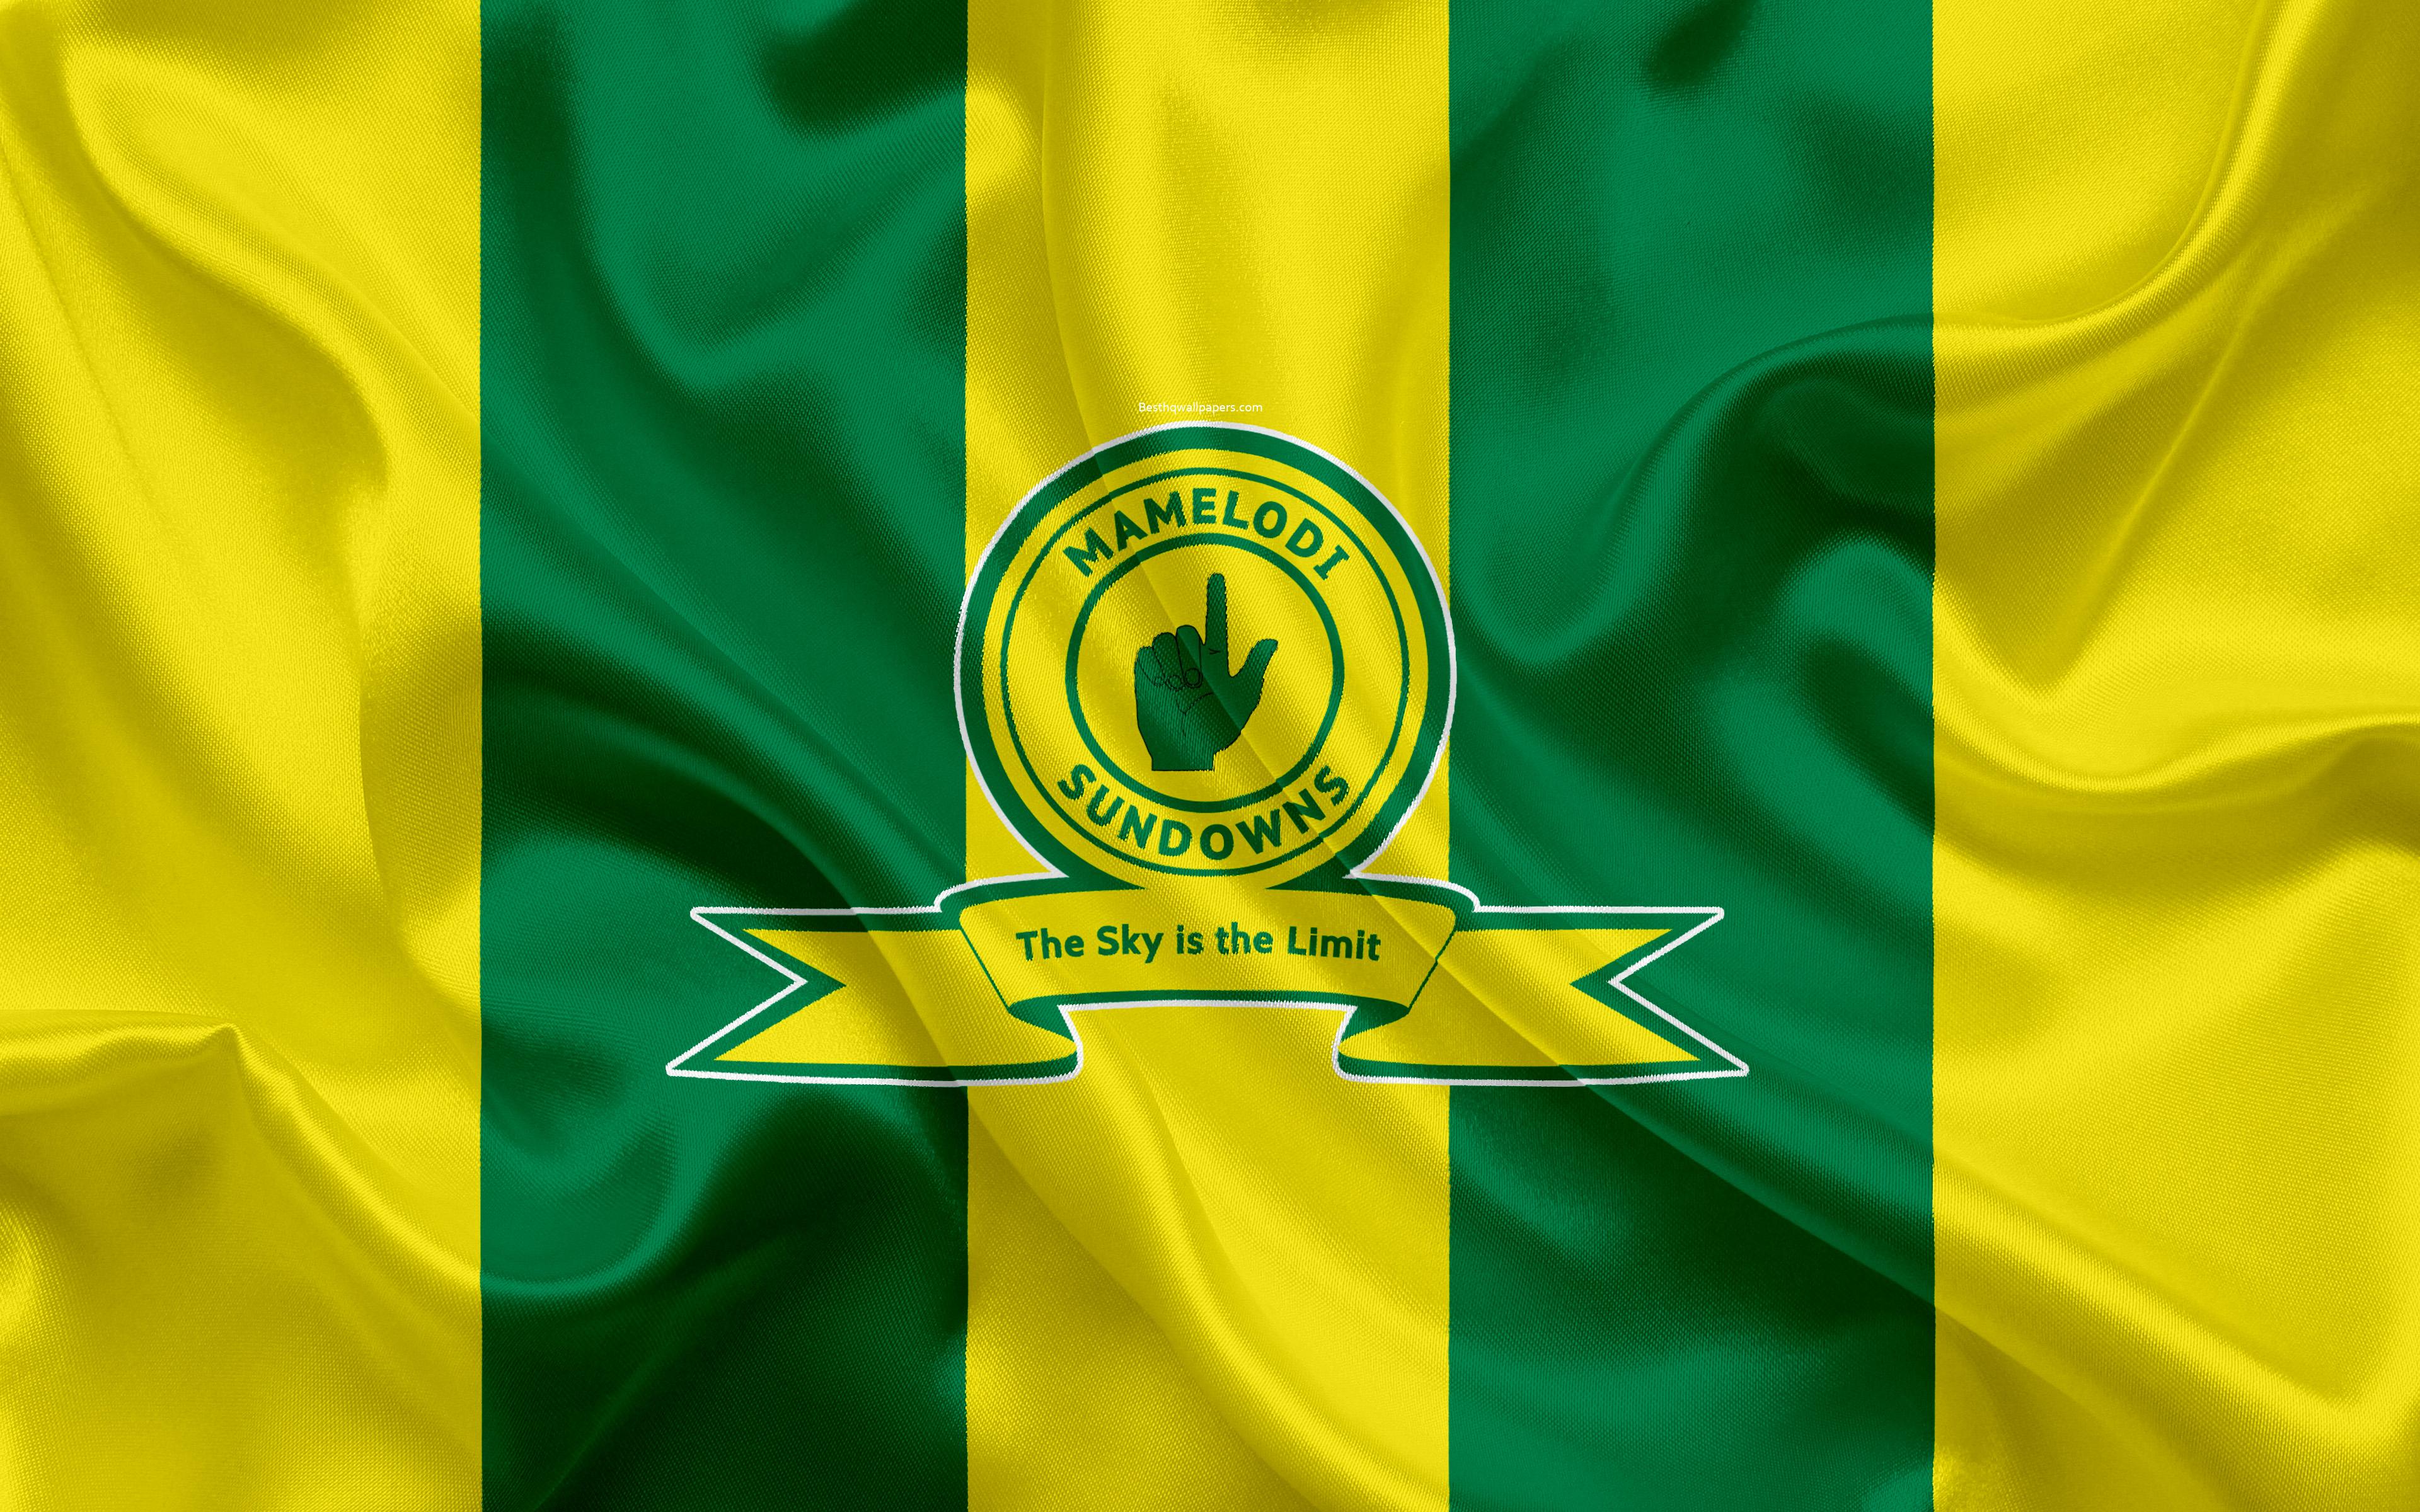 Download wallpaper Mamelodi Sundowns FC, 4k, logo, green yellow